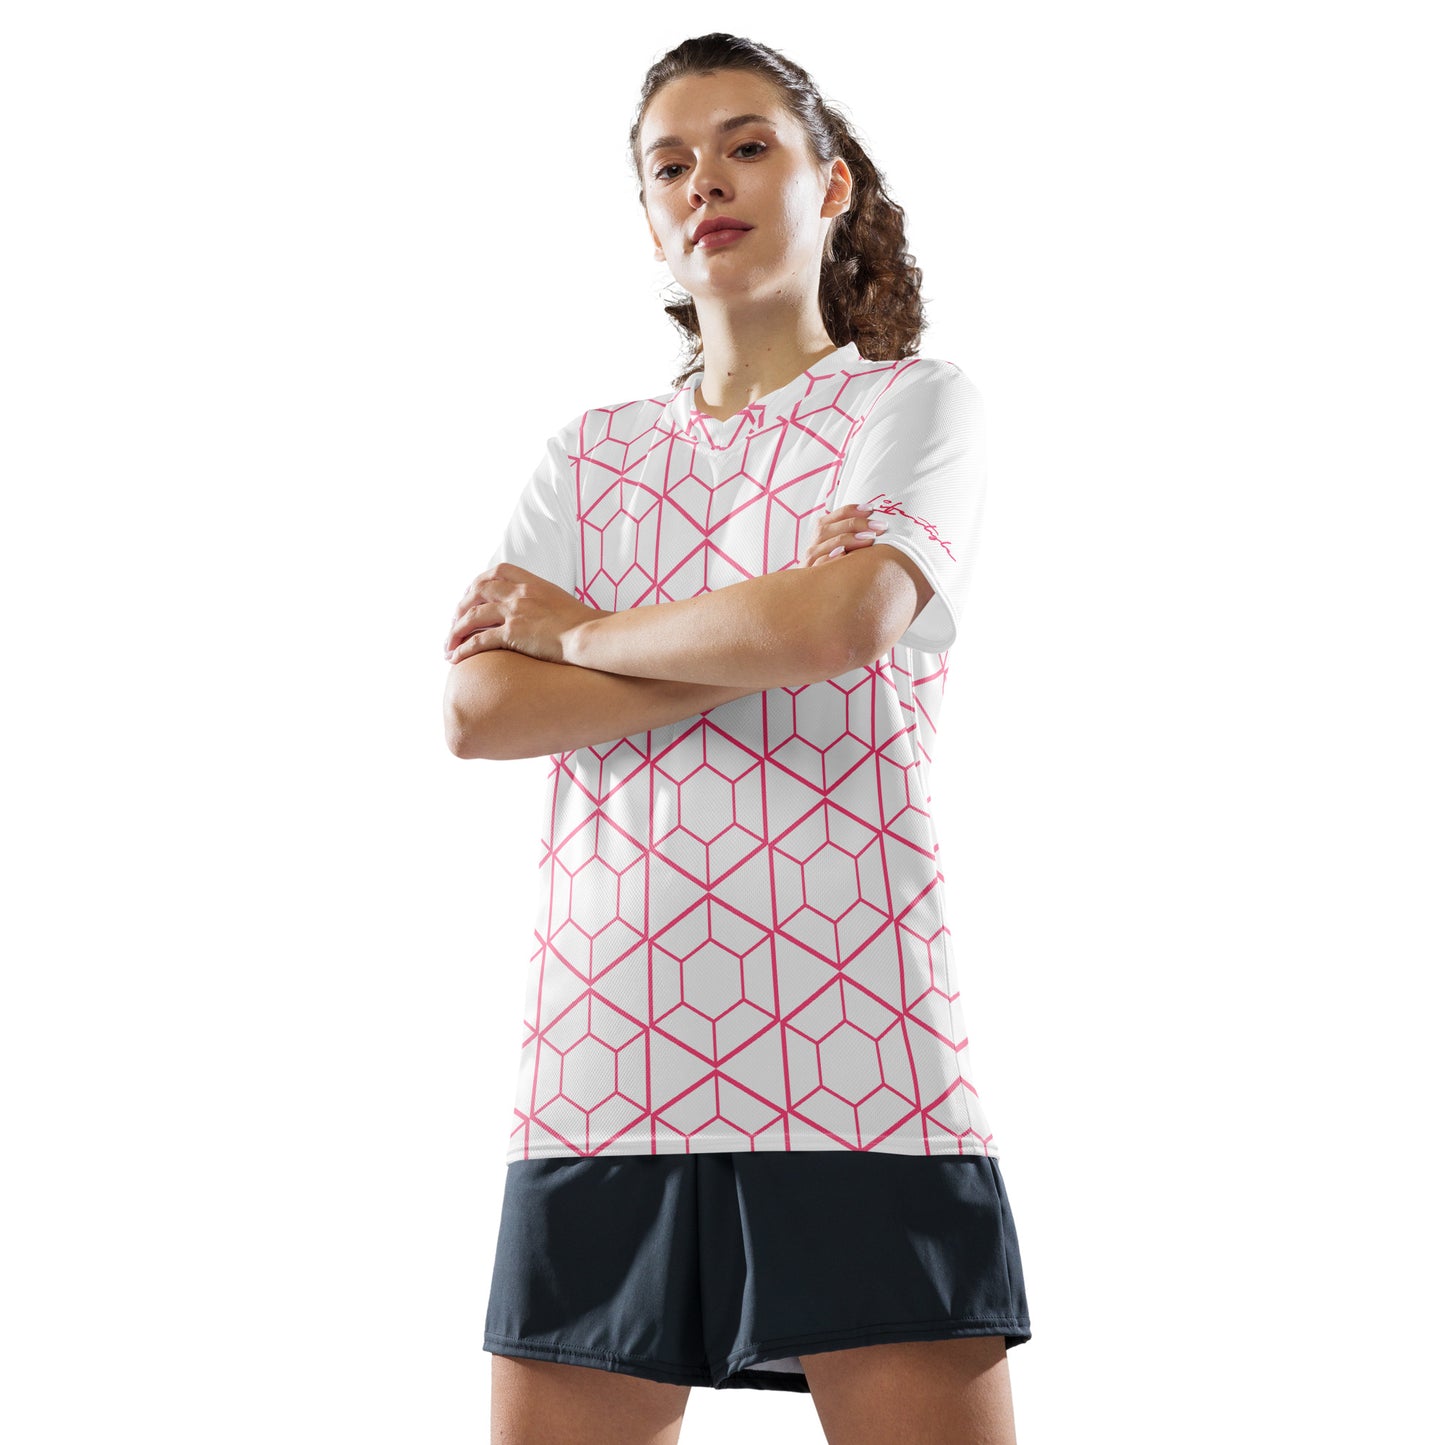 CvLs GL unisex sports jersey (White/Pink)